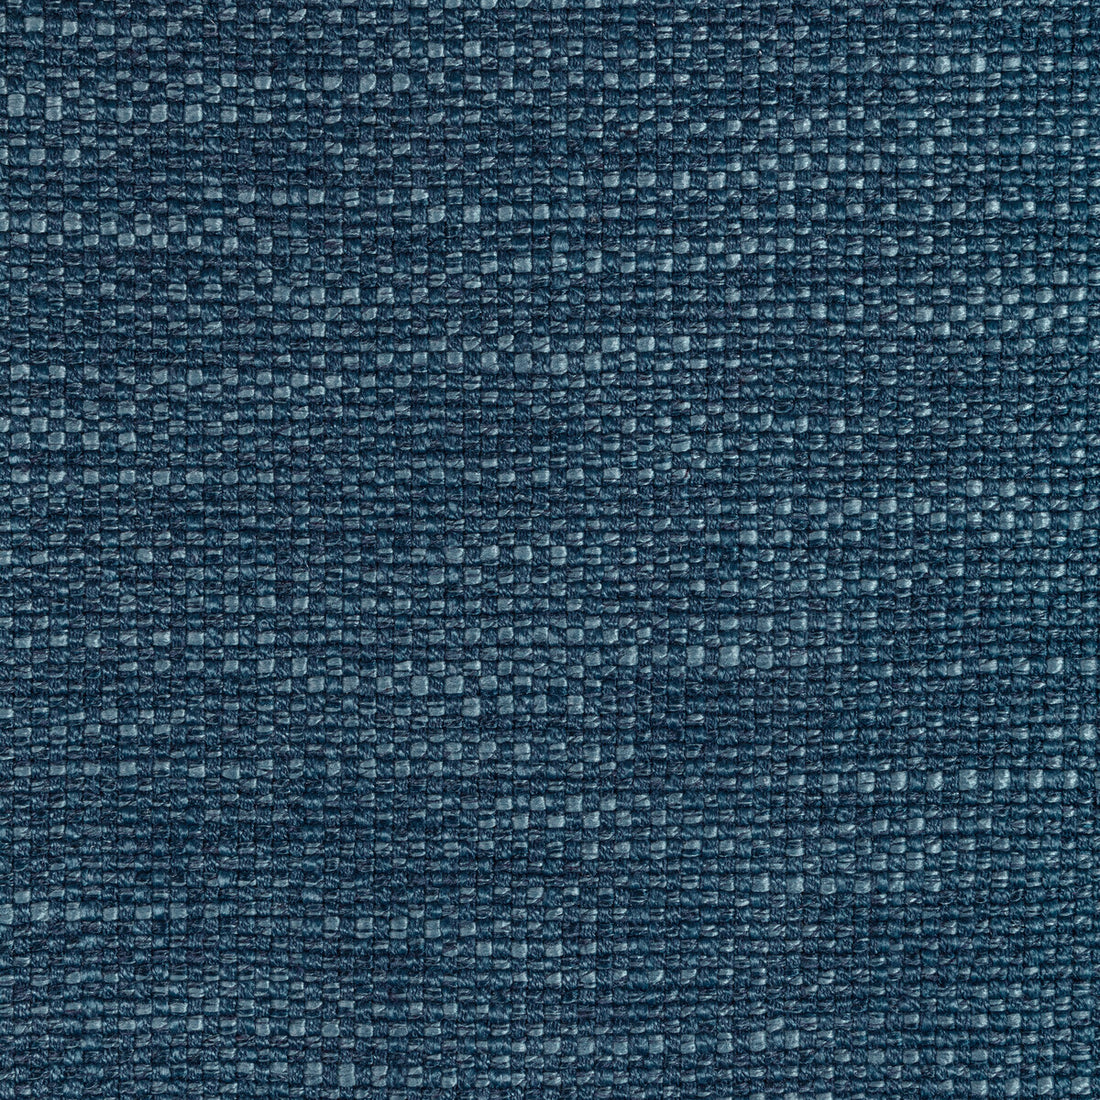 Kravet Design fabric in 36594-50 color - pattern 36594.50.0 - by Kravet Design in the Performance Kravetarmor collection